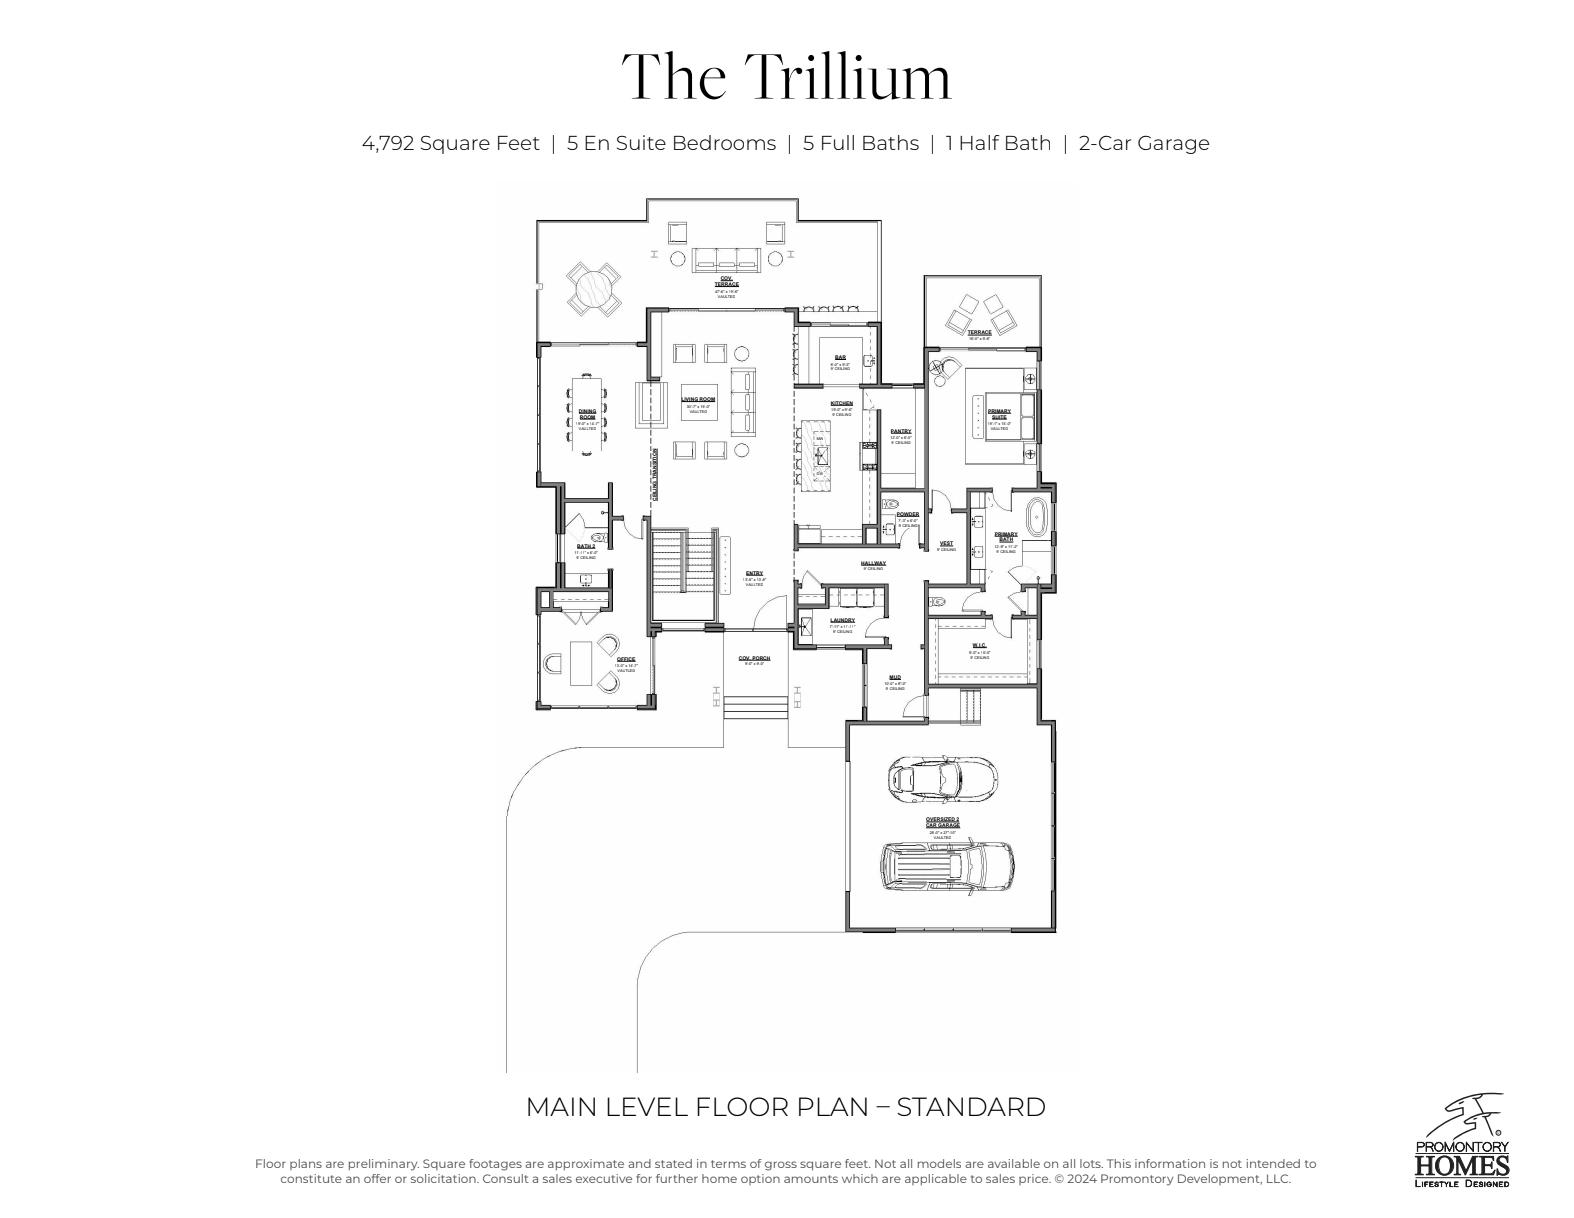 Promontory homes - The Trillium